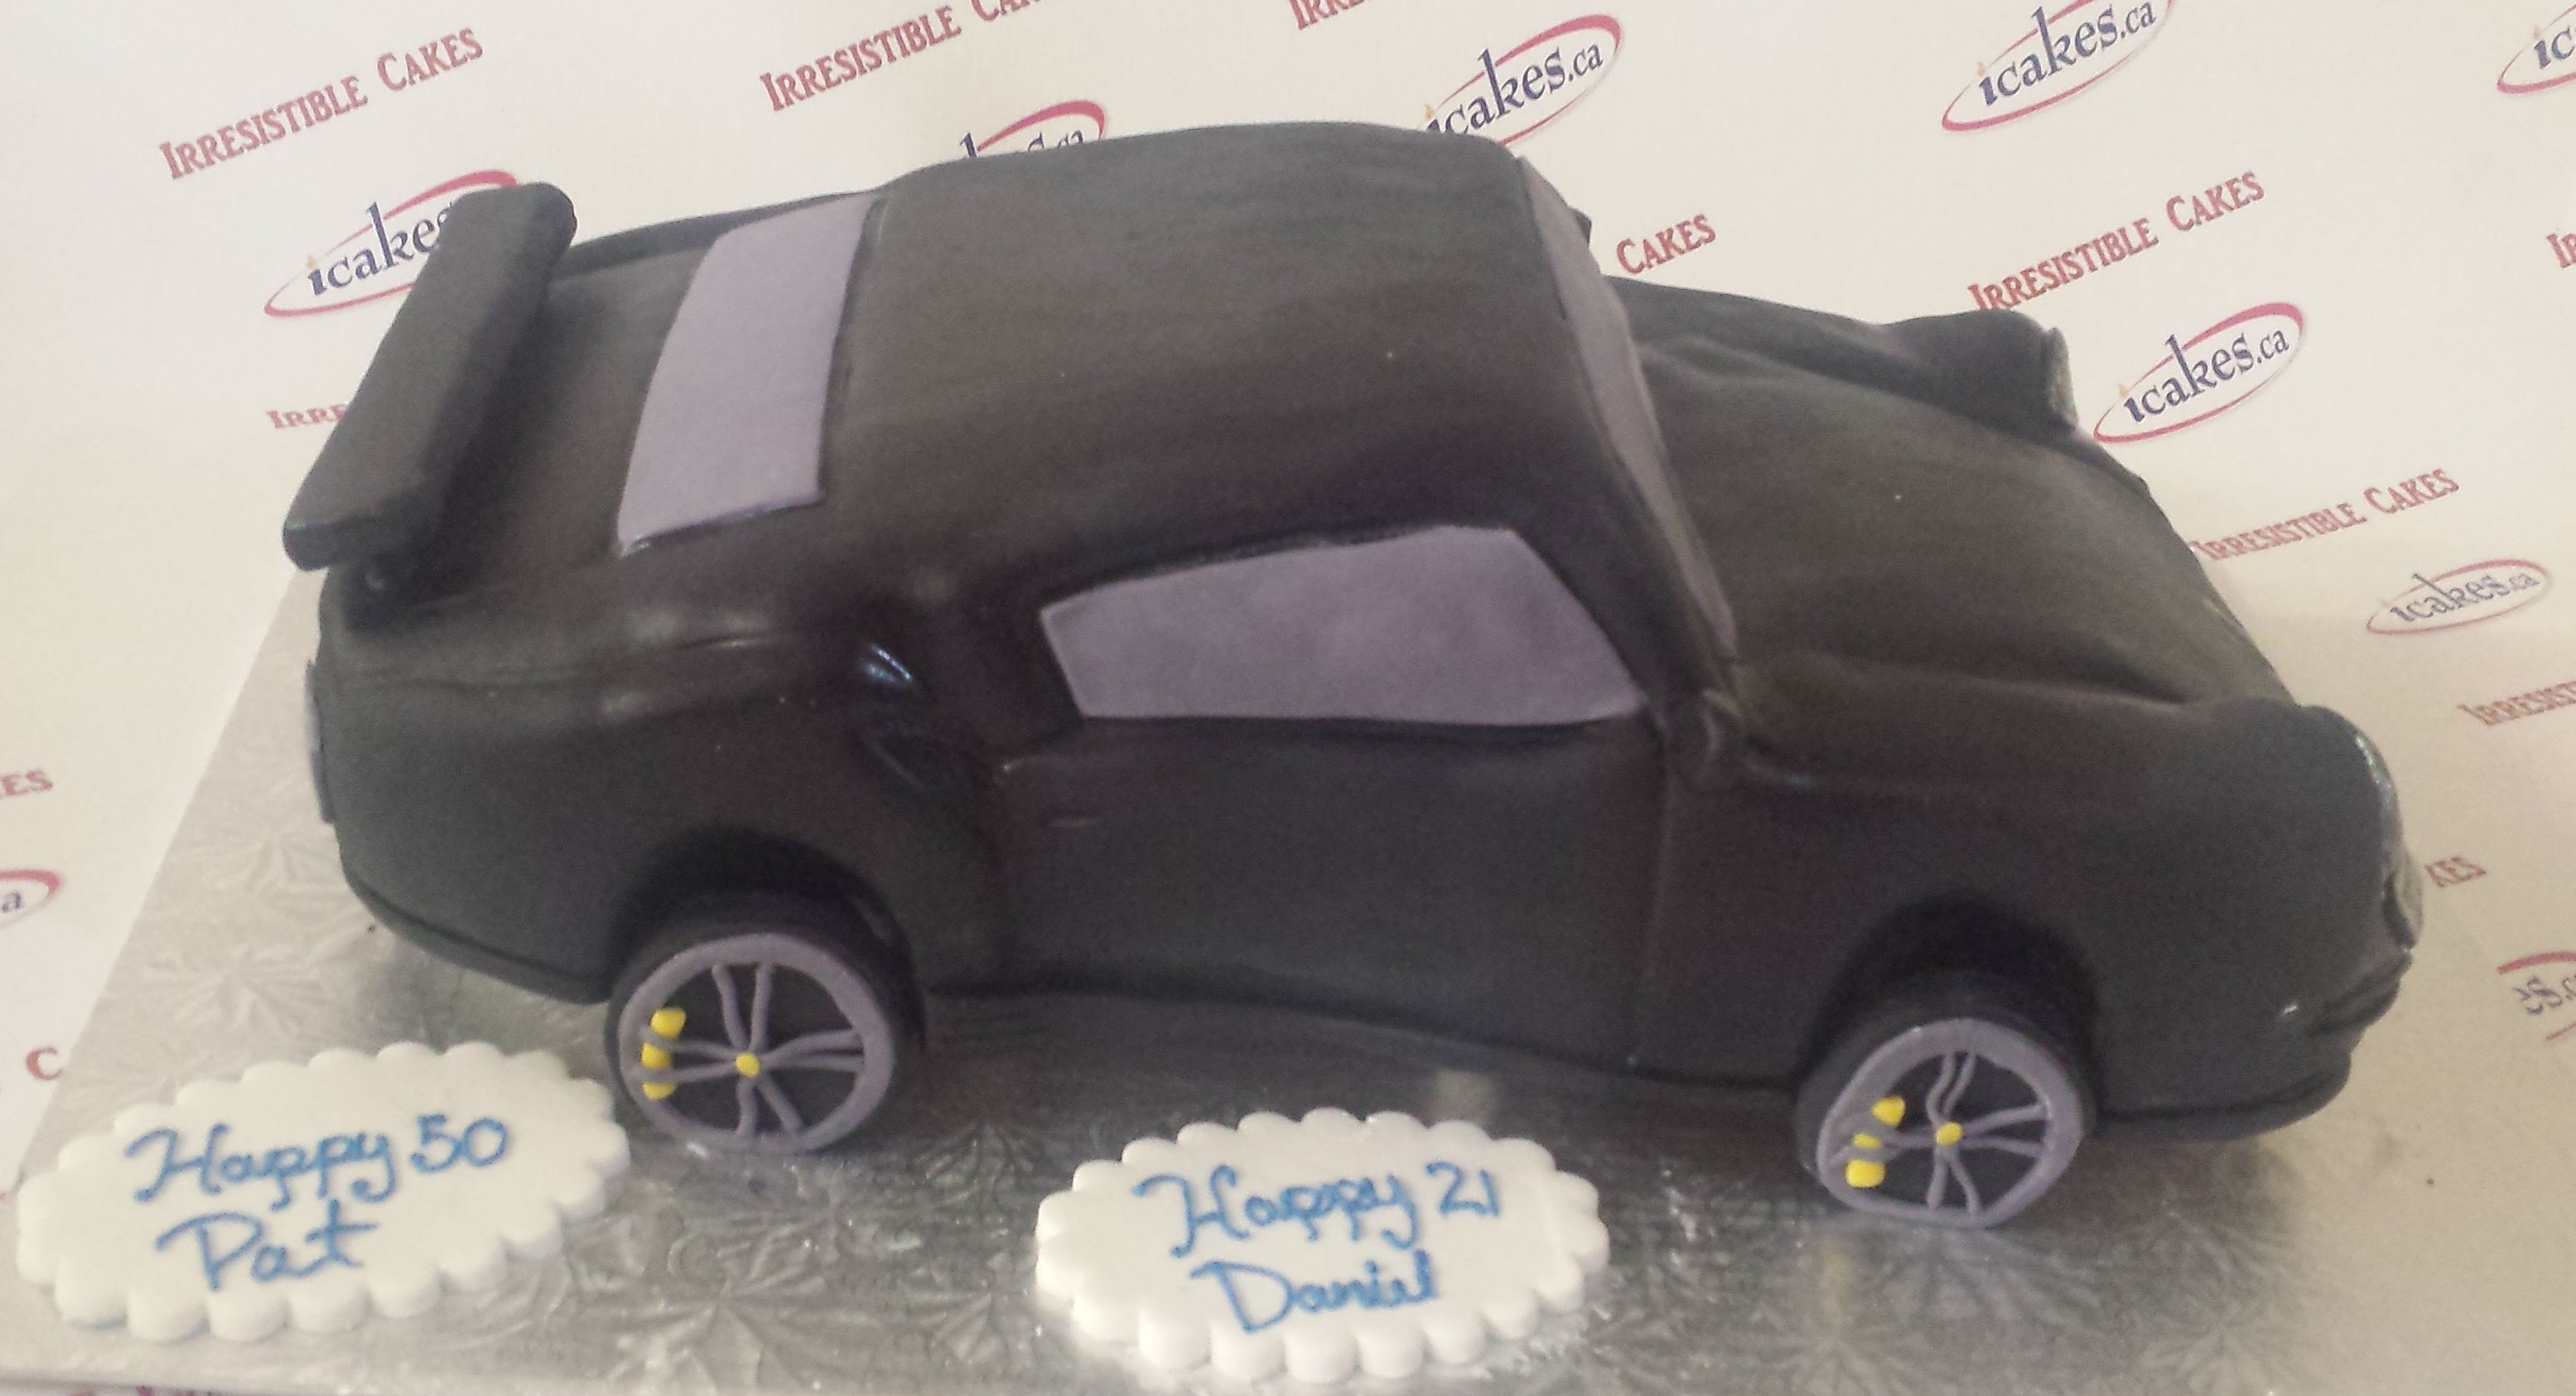 Porsche Car Shaped Fondant Birthday Cake For Man/Boy